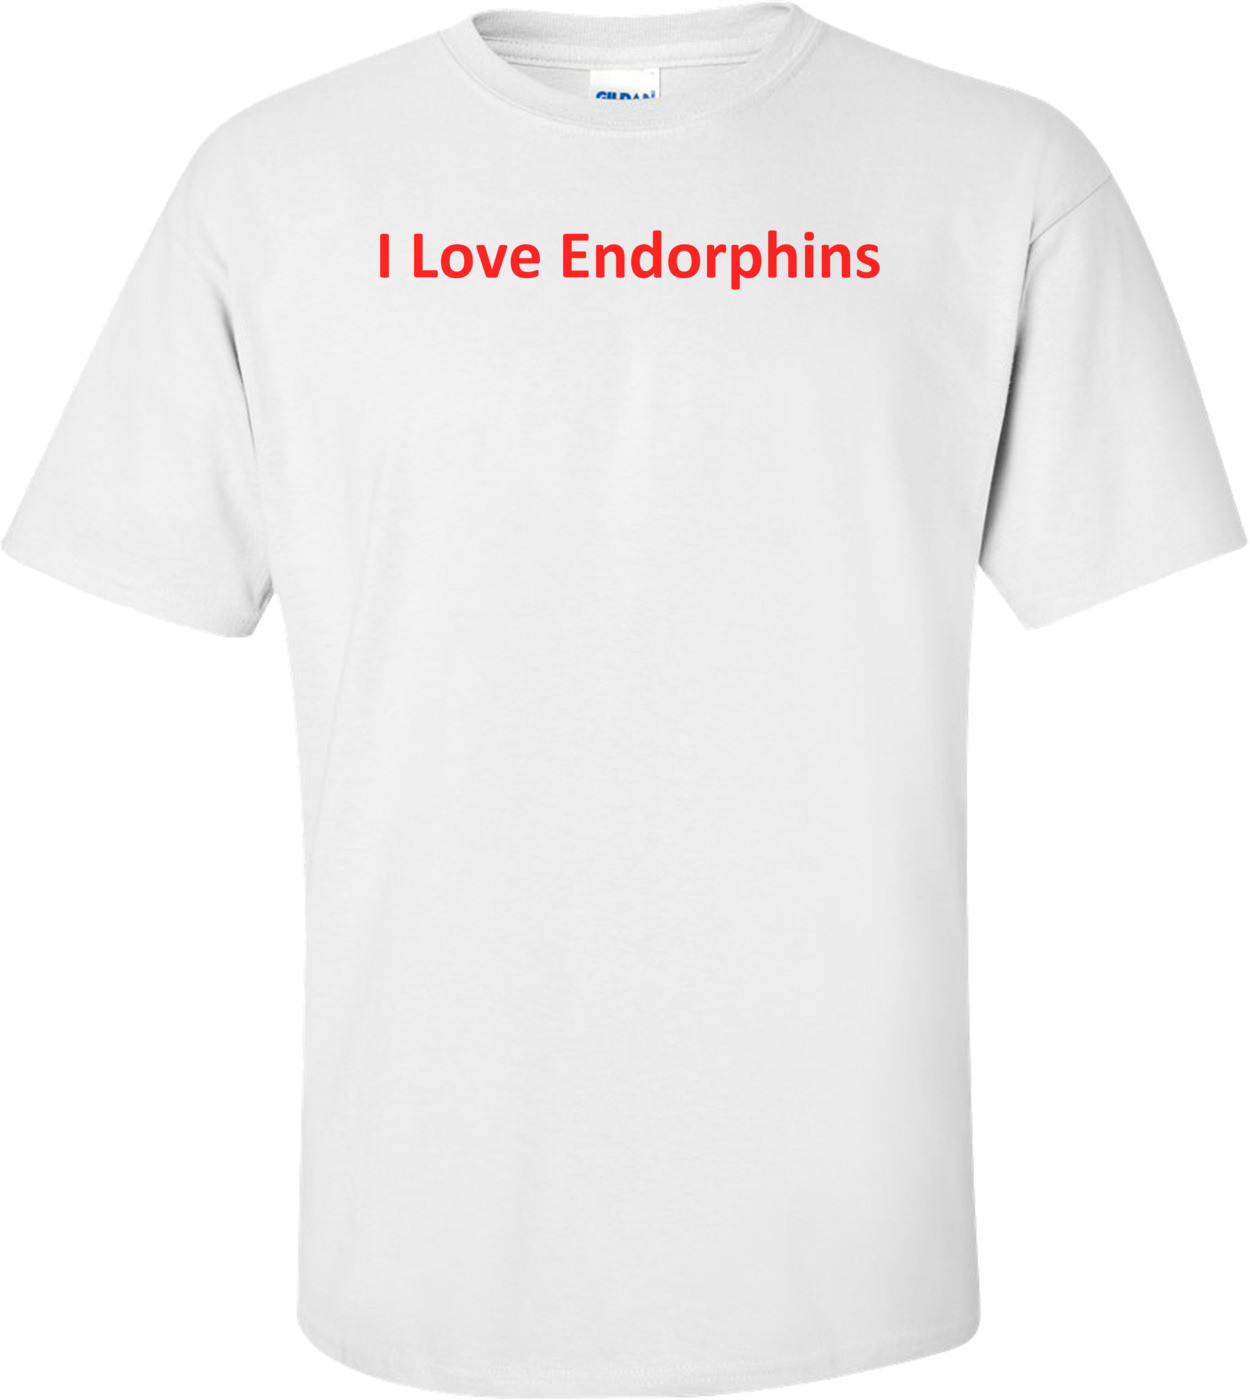 I Love Endorphins